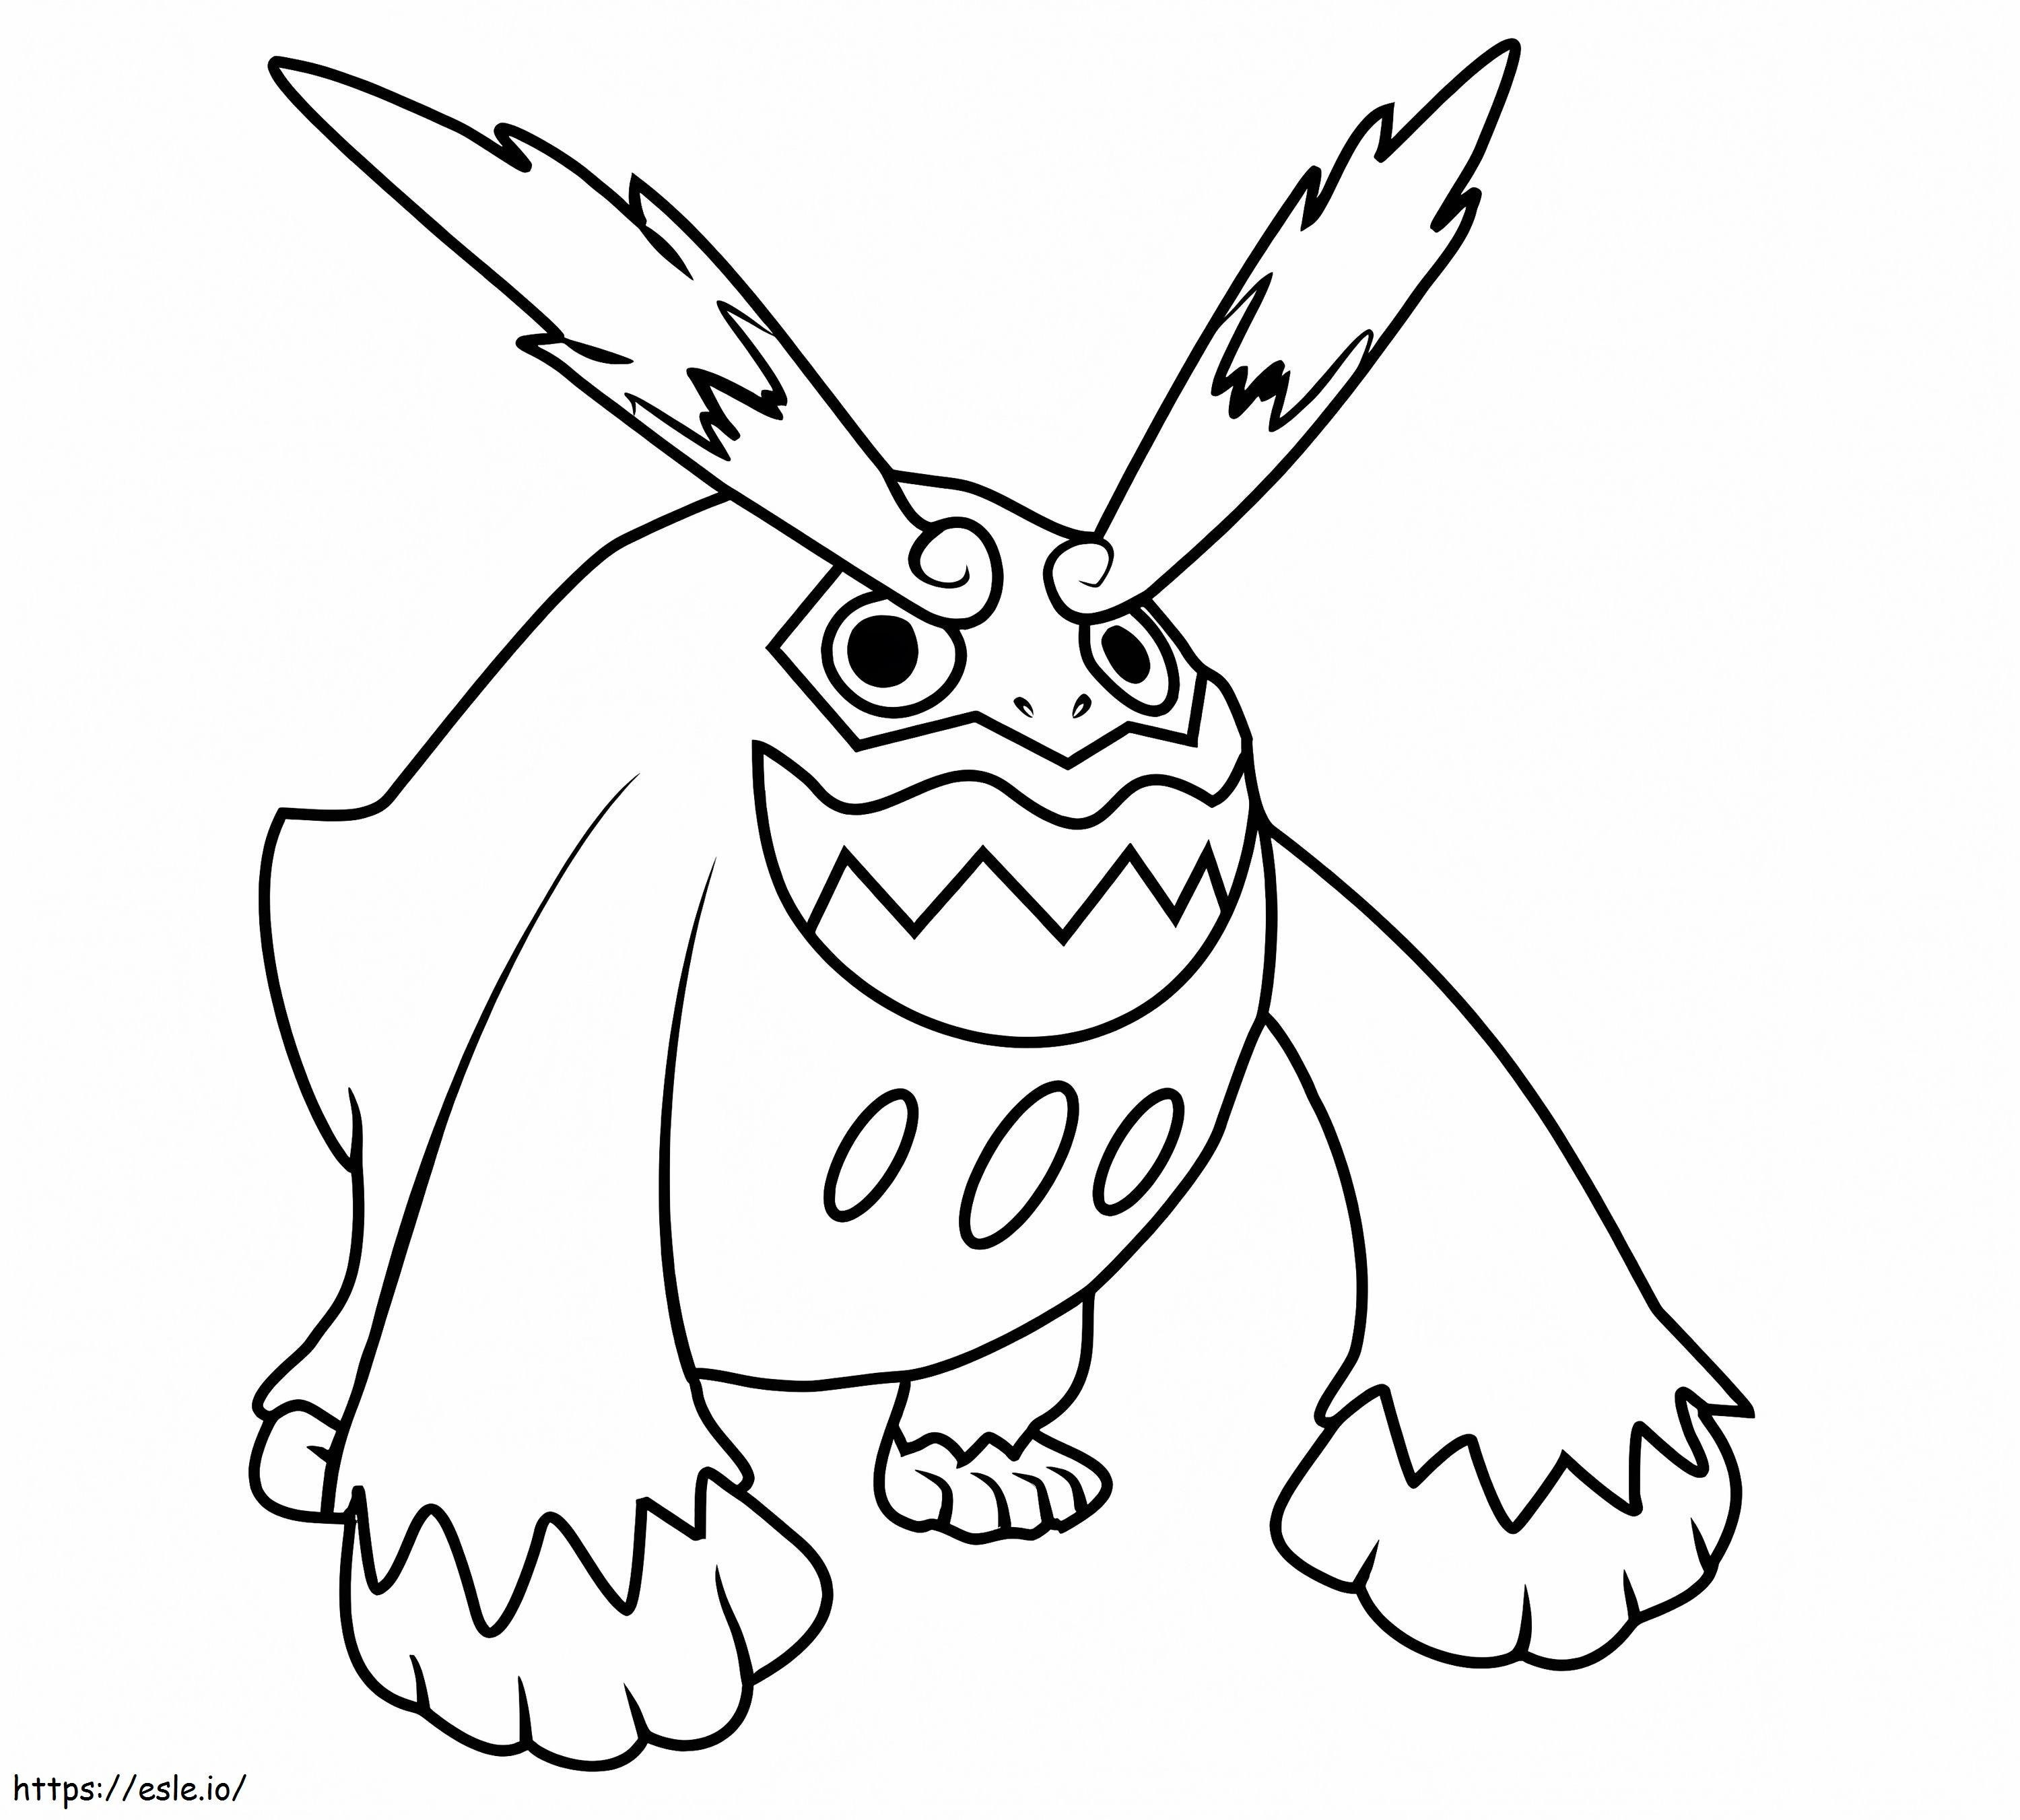 Imagem do Pokémon HQ Darmanitan para colorir